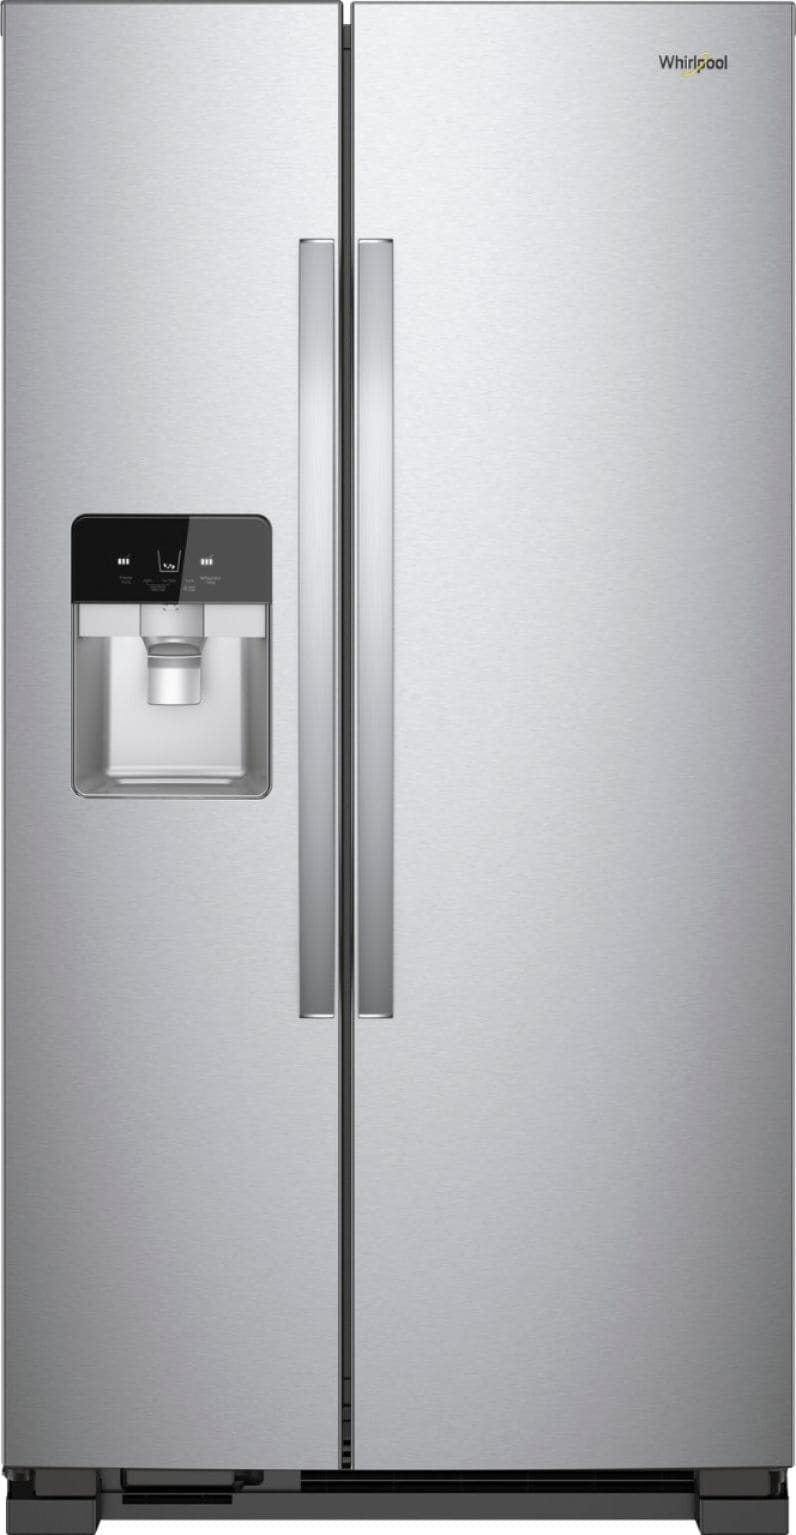 Whirlpool - 21.4 Cu. Ft. Side-by-Side Refrigerator Fingerprint Resistant - Stainless steel_0